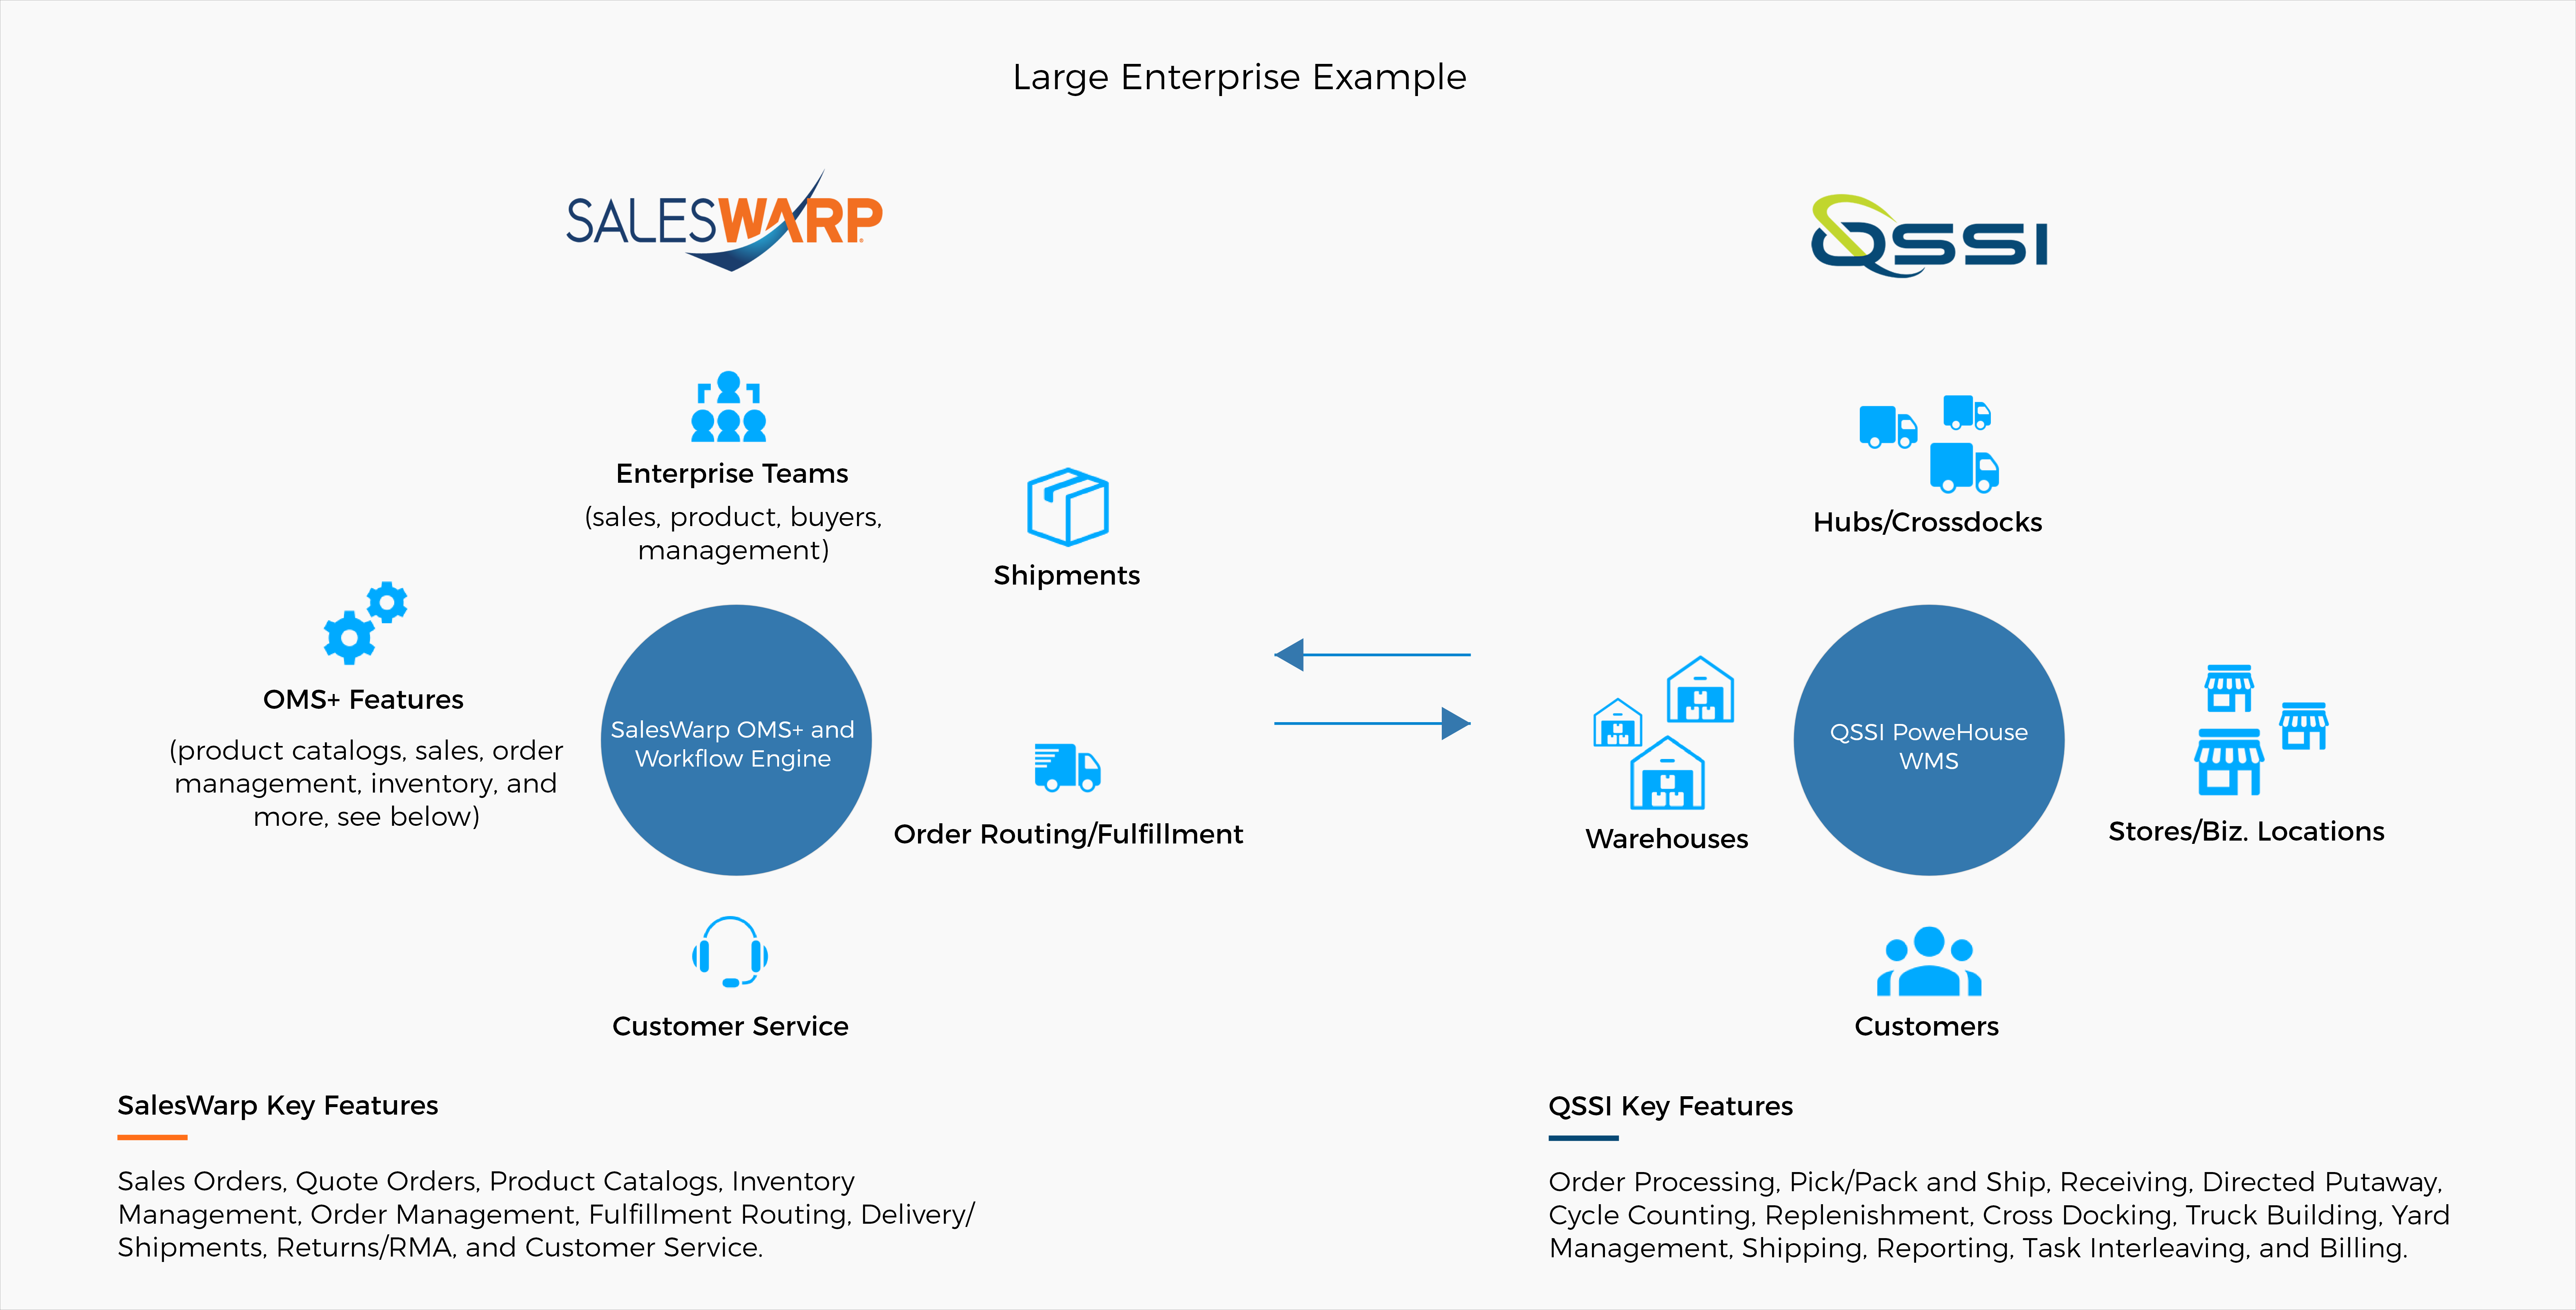 saleswarp and qssi large enterprise model 